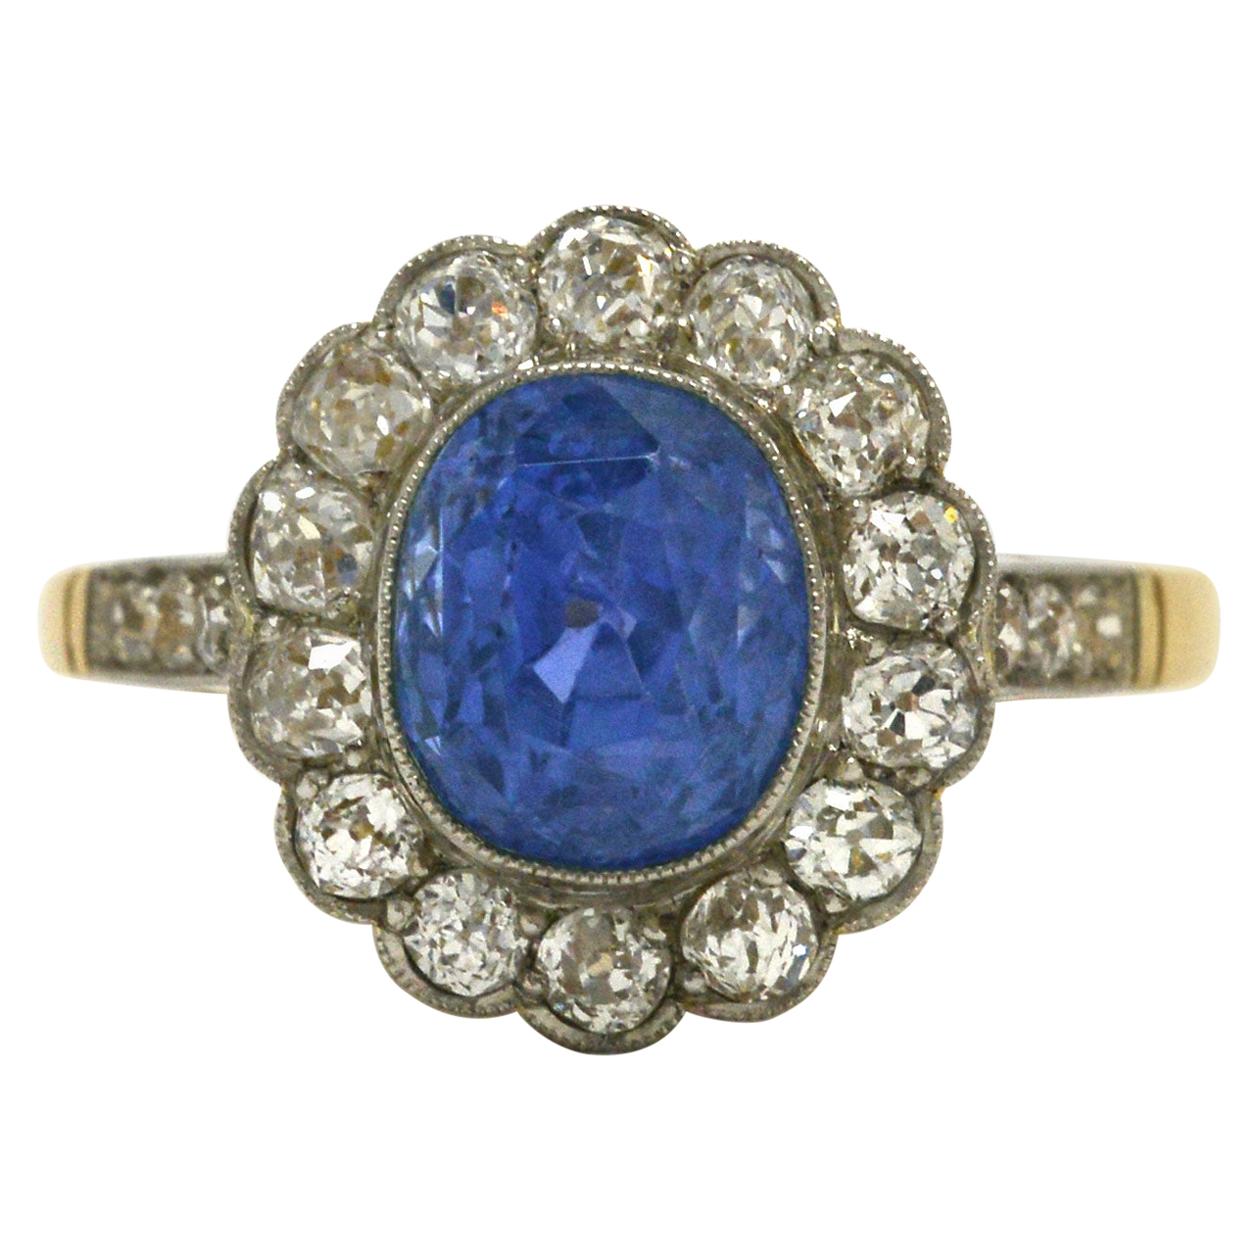 Original Edwardian Antique Sapphire Ring Over 4 Carats Diamond Halo